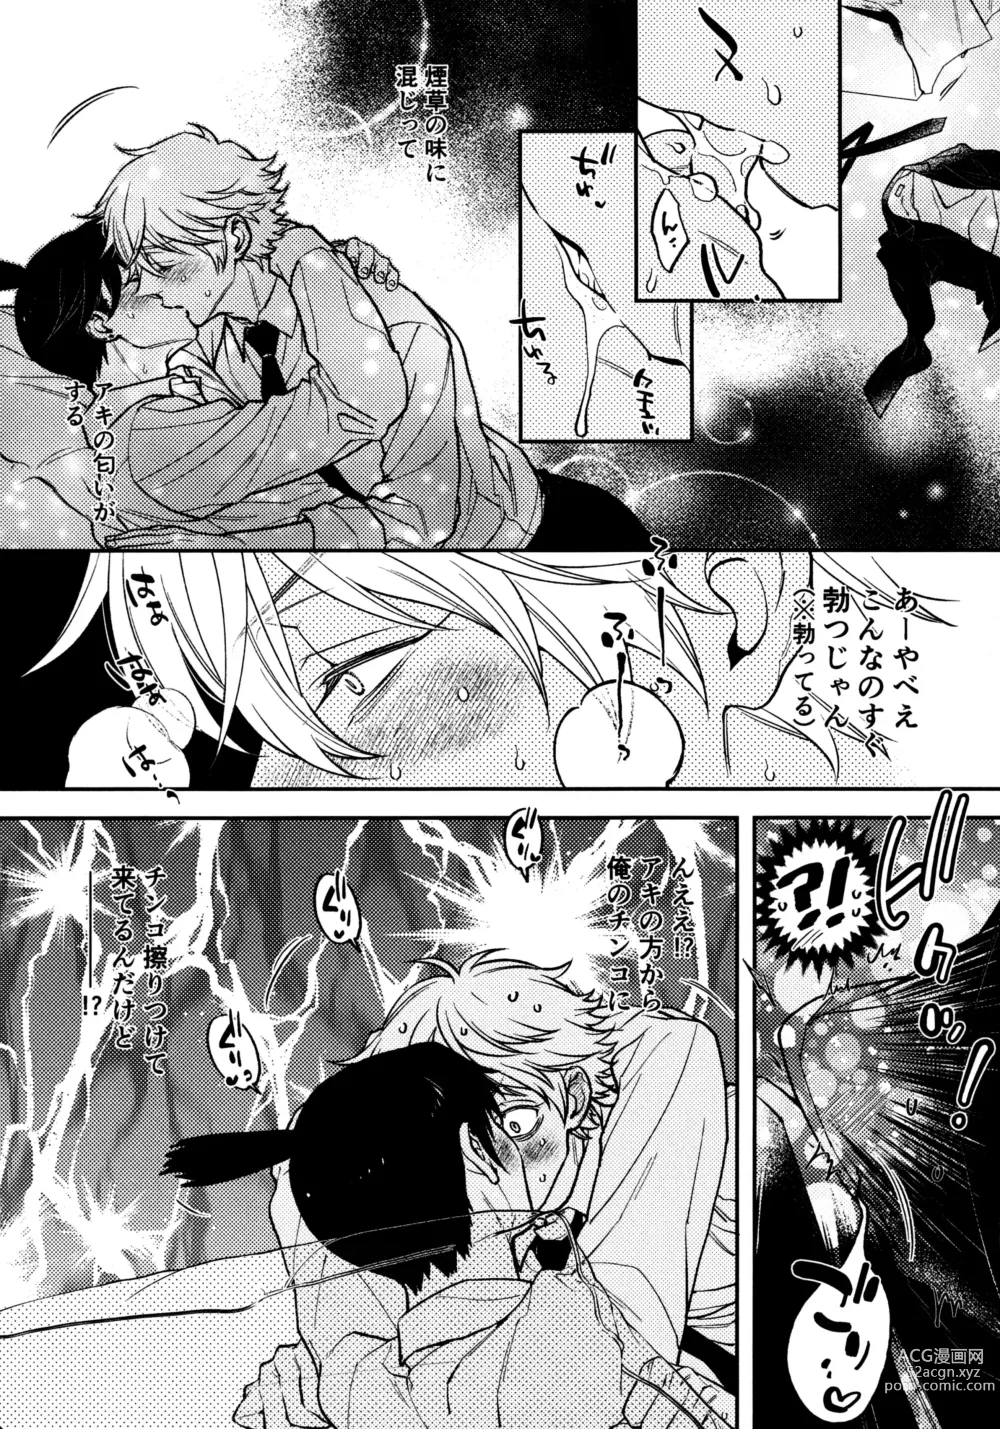 Page 9 of doujinshi Hajimete wa Zettee Aki ga Ii